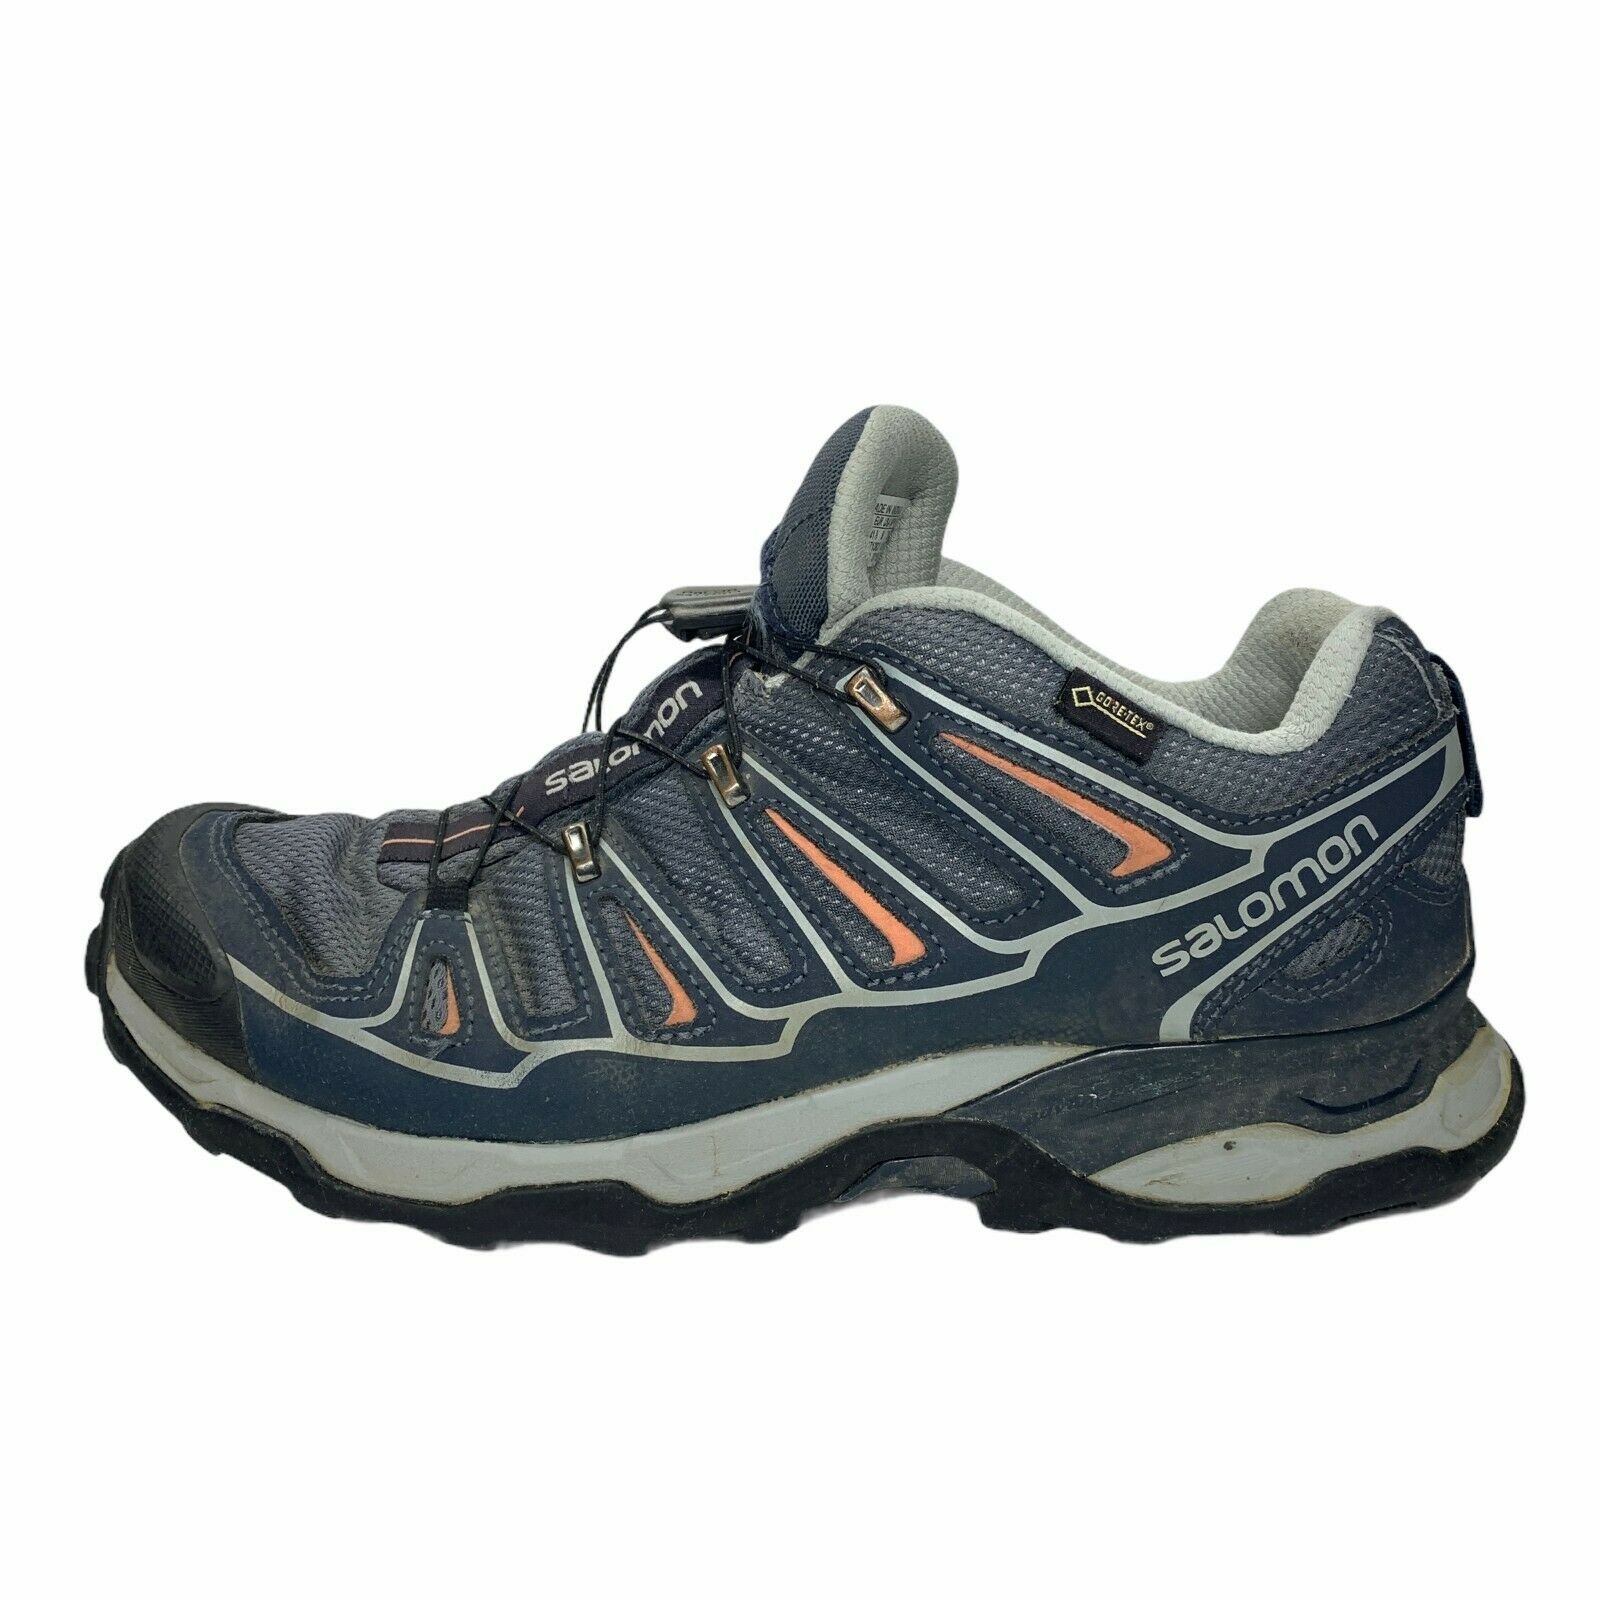 Salomon X Ultra 2 GTX Women's Hiking Trail Running Athletic Shoes Gray Size 9M